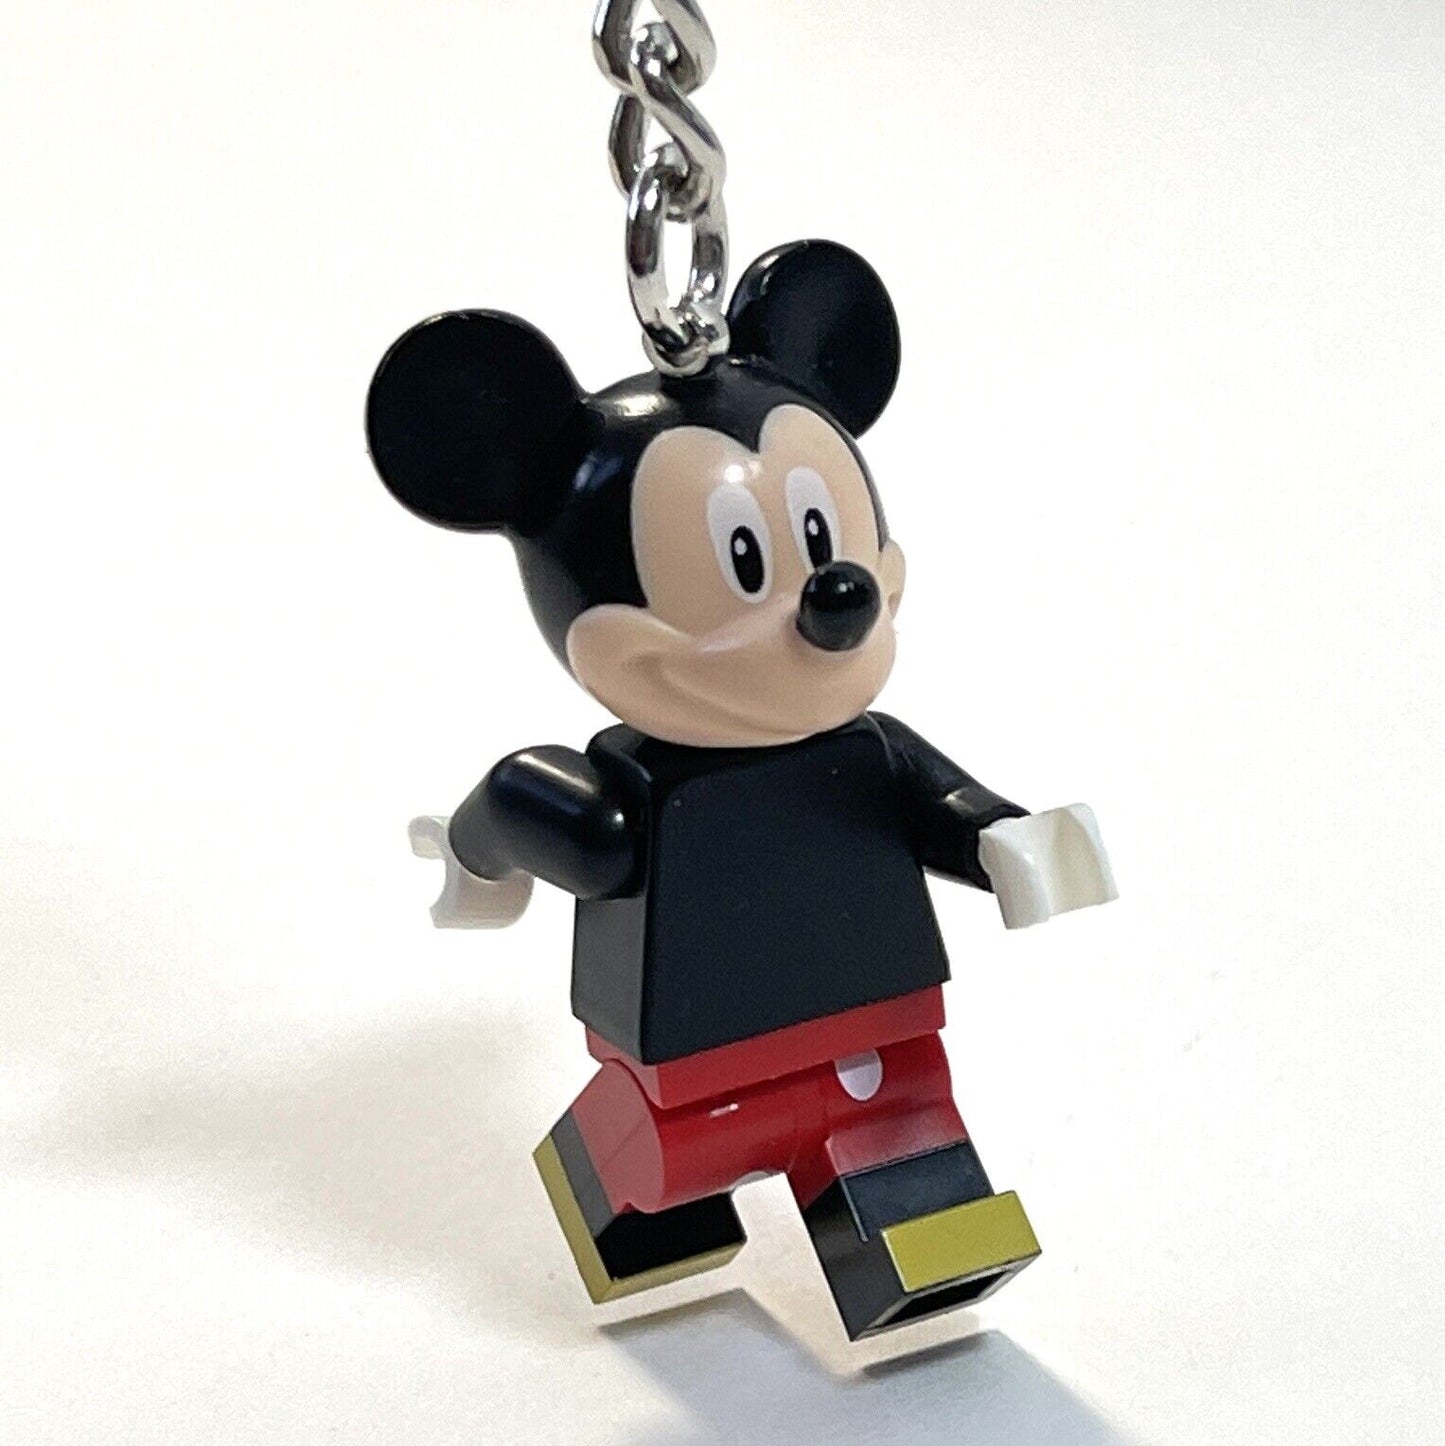 LEGO Disney Mickey Mouse Minifigure Keychain NWT Key Ring Posable Toy